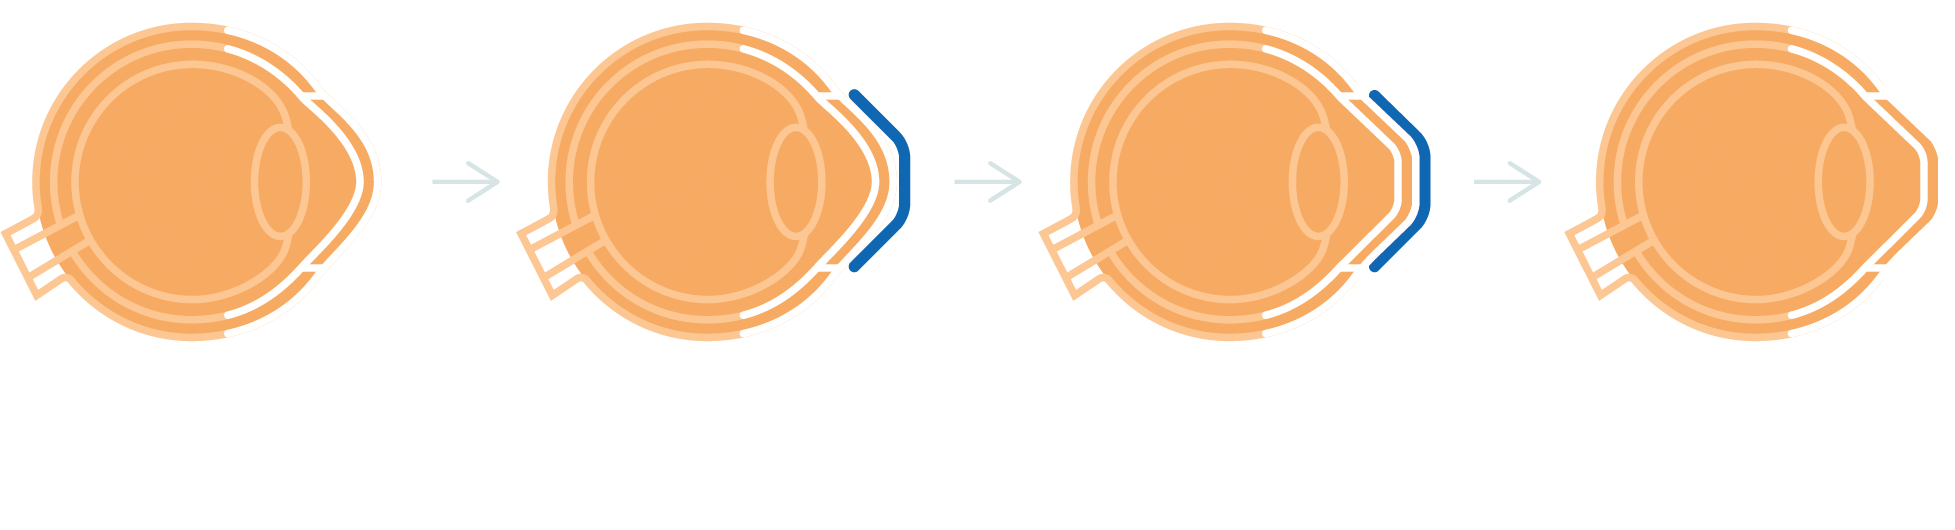 Ortho K myopia control contact lenses